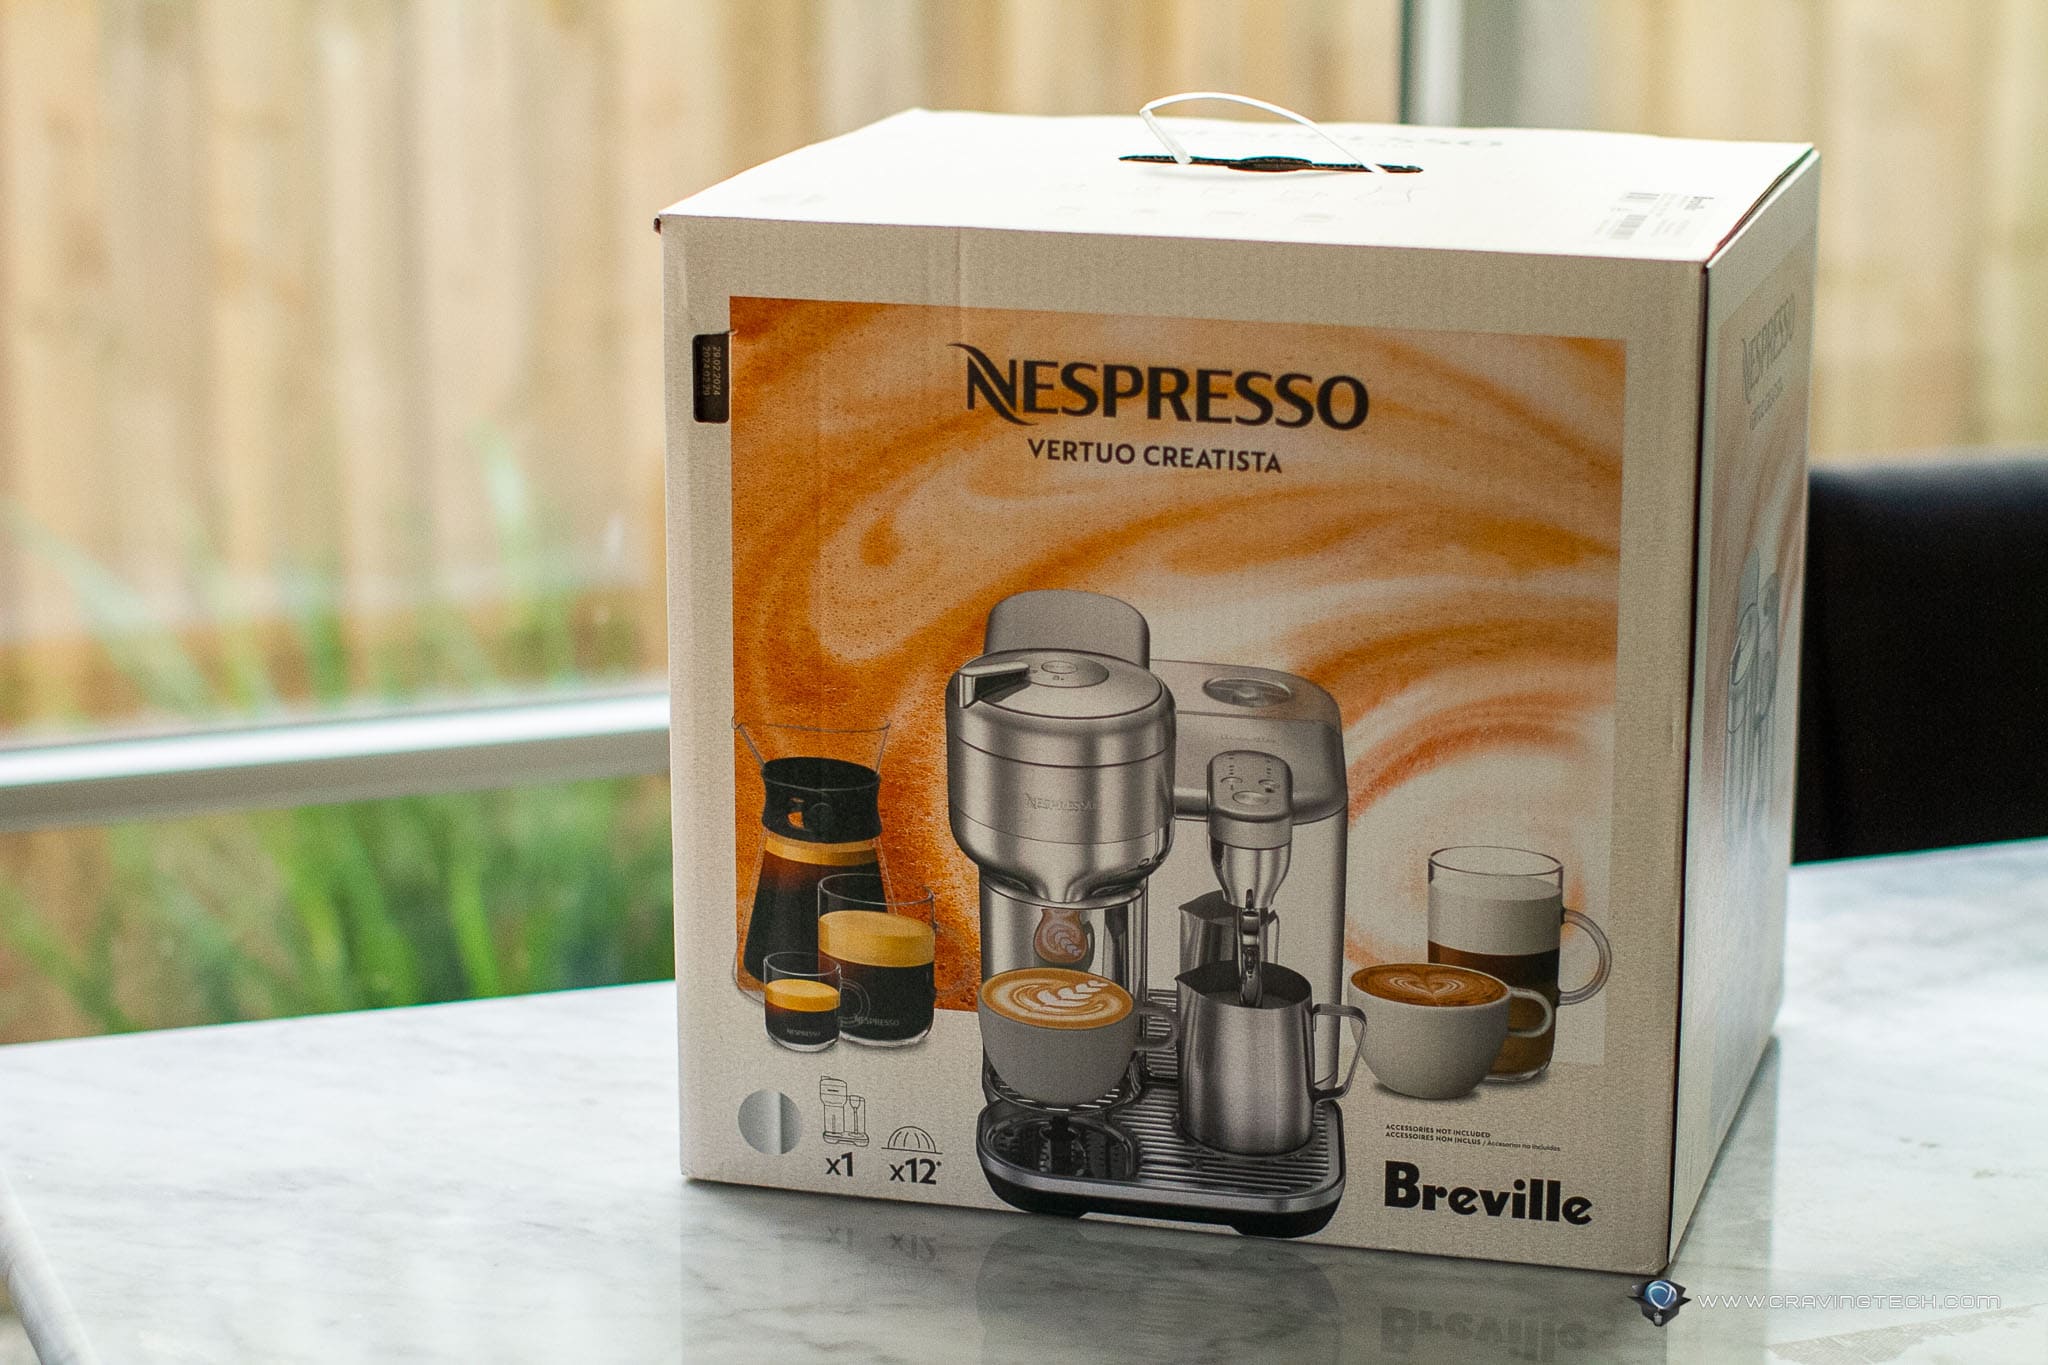 Nespresso Vertuo Creatista: Breville Stainless Steel